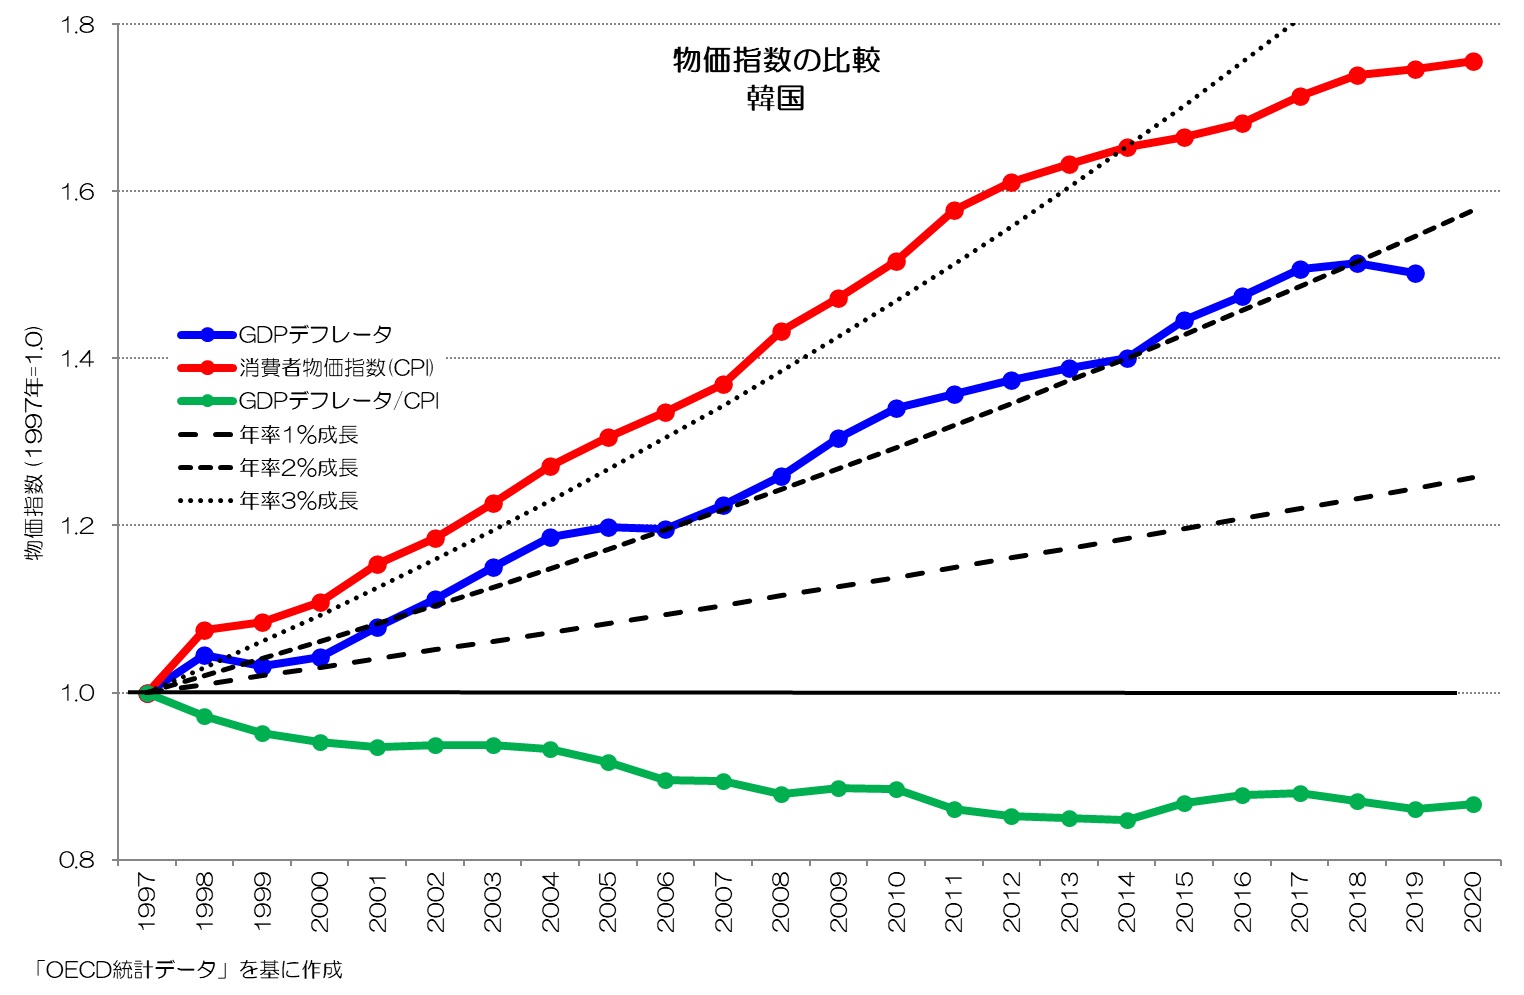 物価指数の比較 1997年基準 韓国